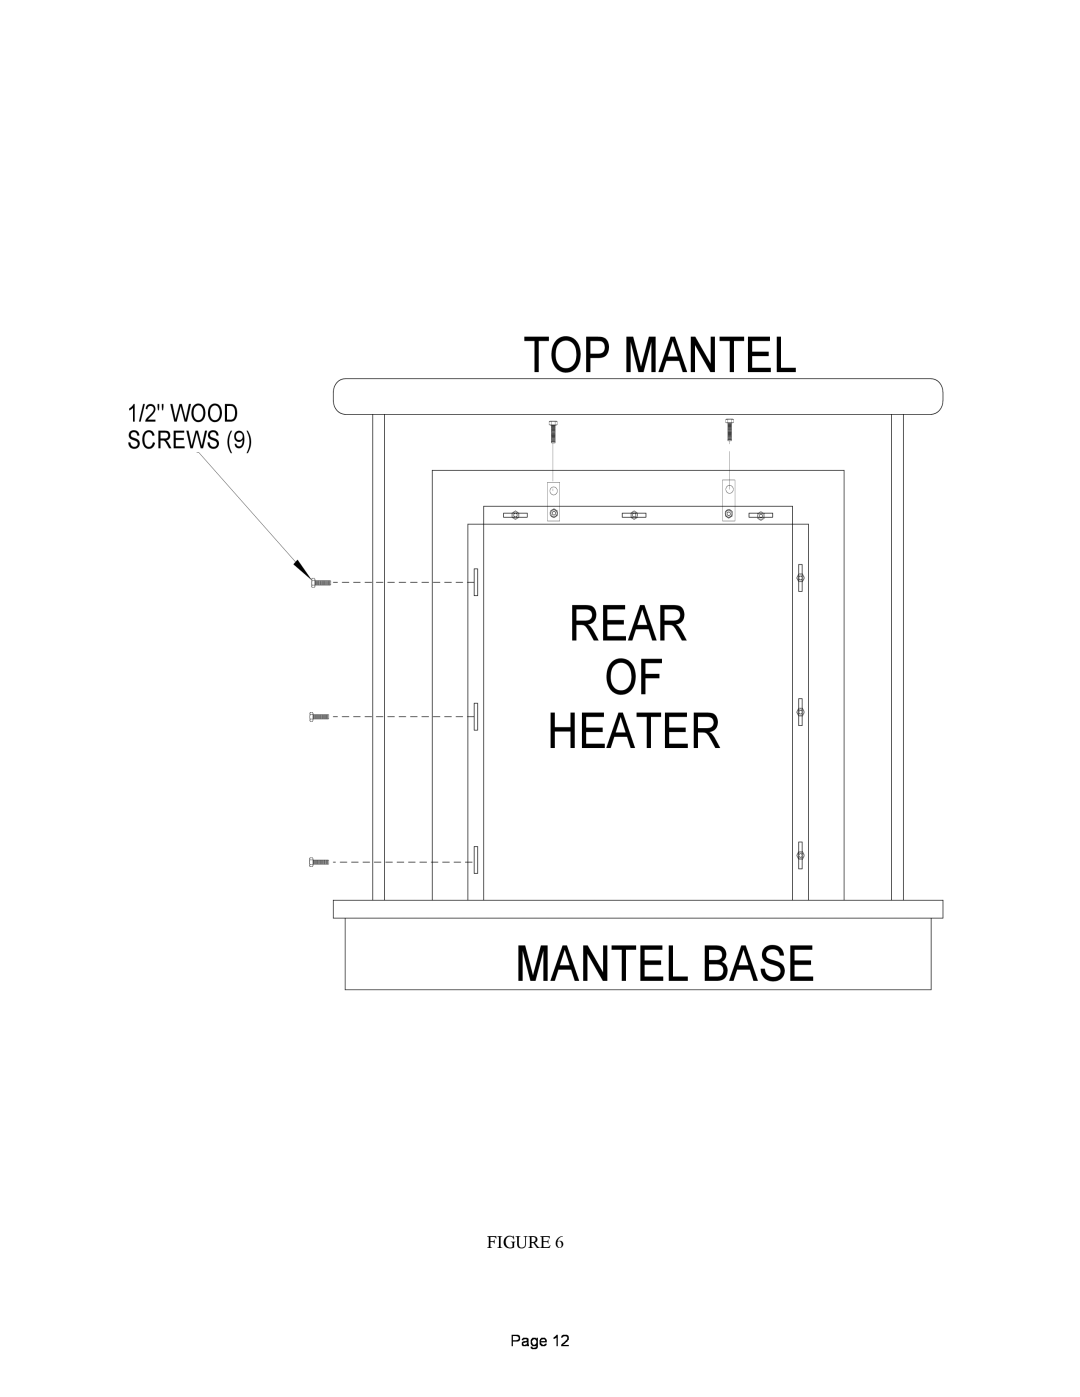 New Buck Corporation FP-BR-10-ZC manual 1/2 WOOD SCREWS, Top Mantel, Mantel Base, Rear, Heater, Page 